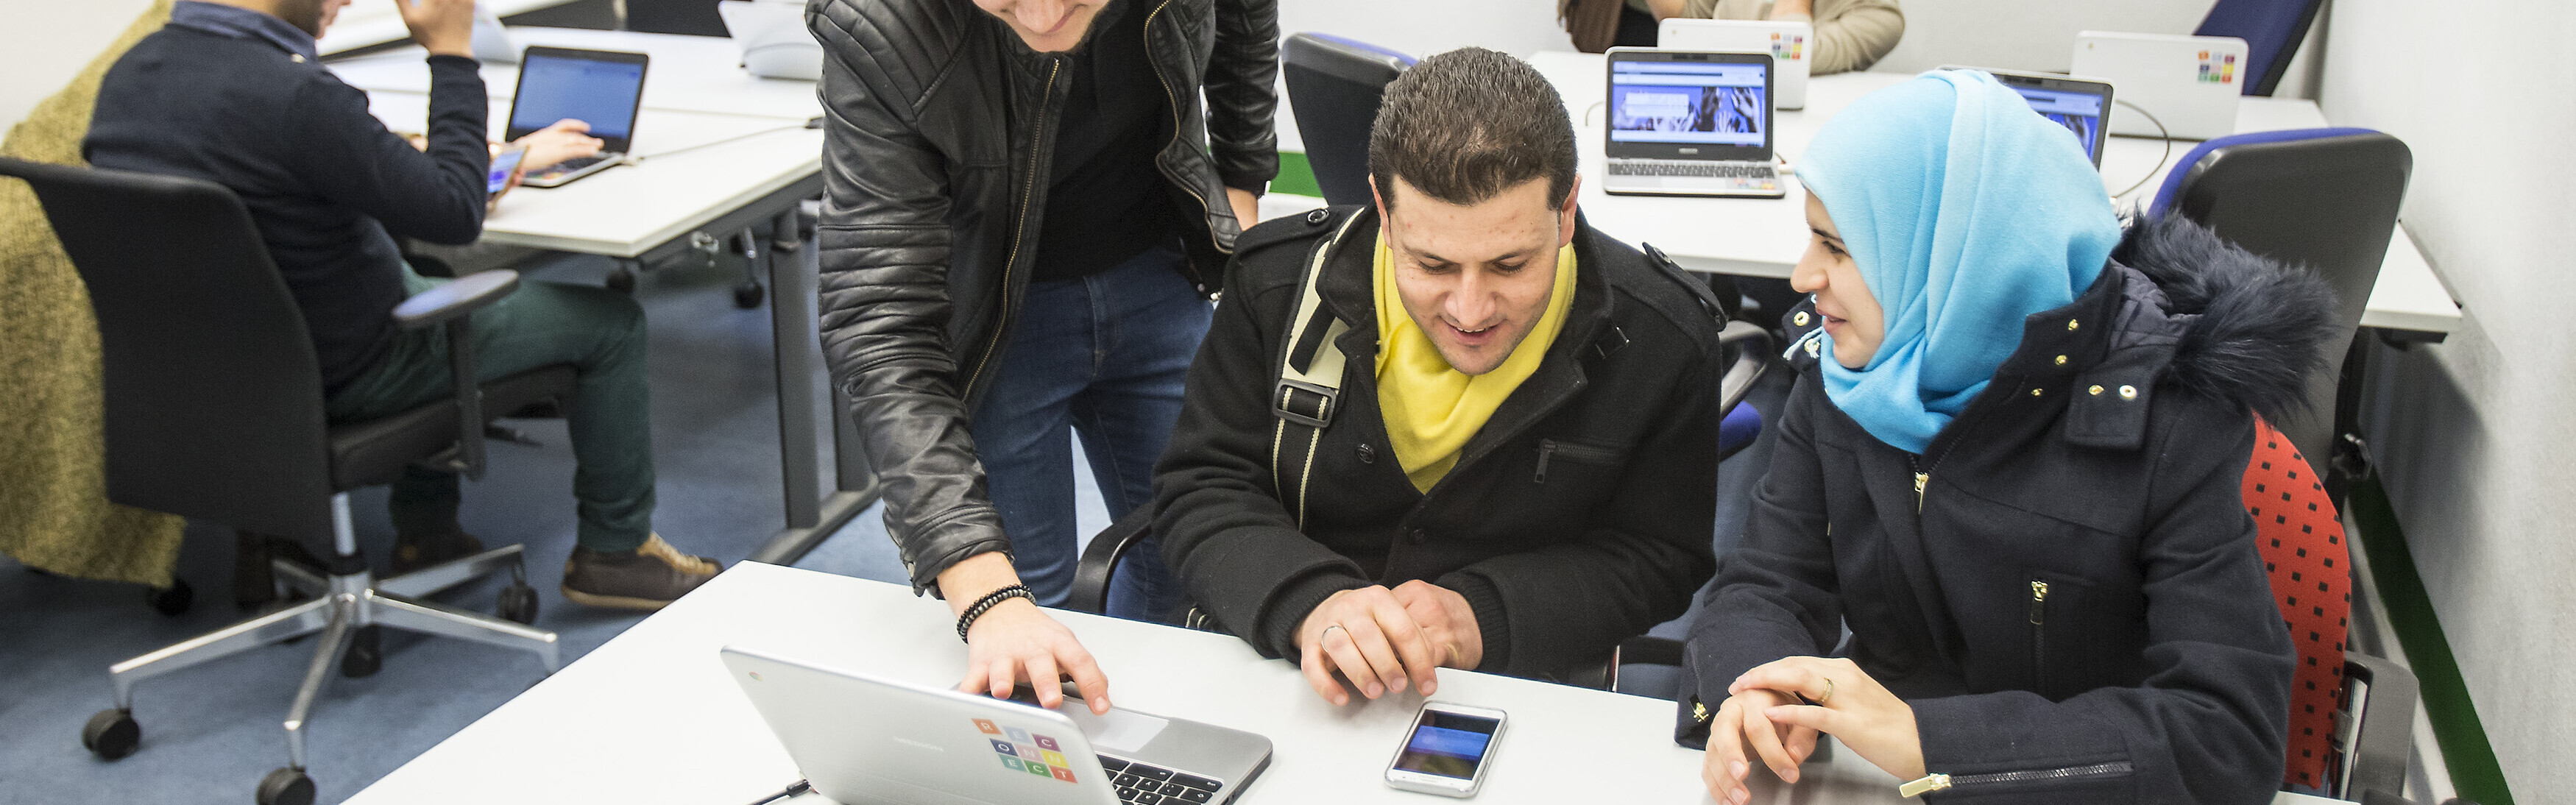 Flüchtlingshilfe Deutschland Kooperation Google ASB Laptop Lernen